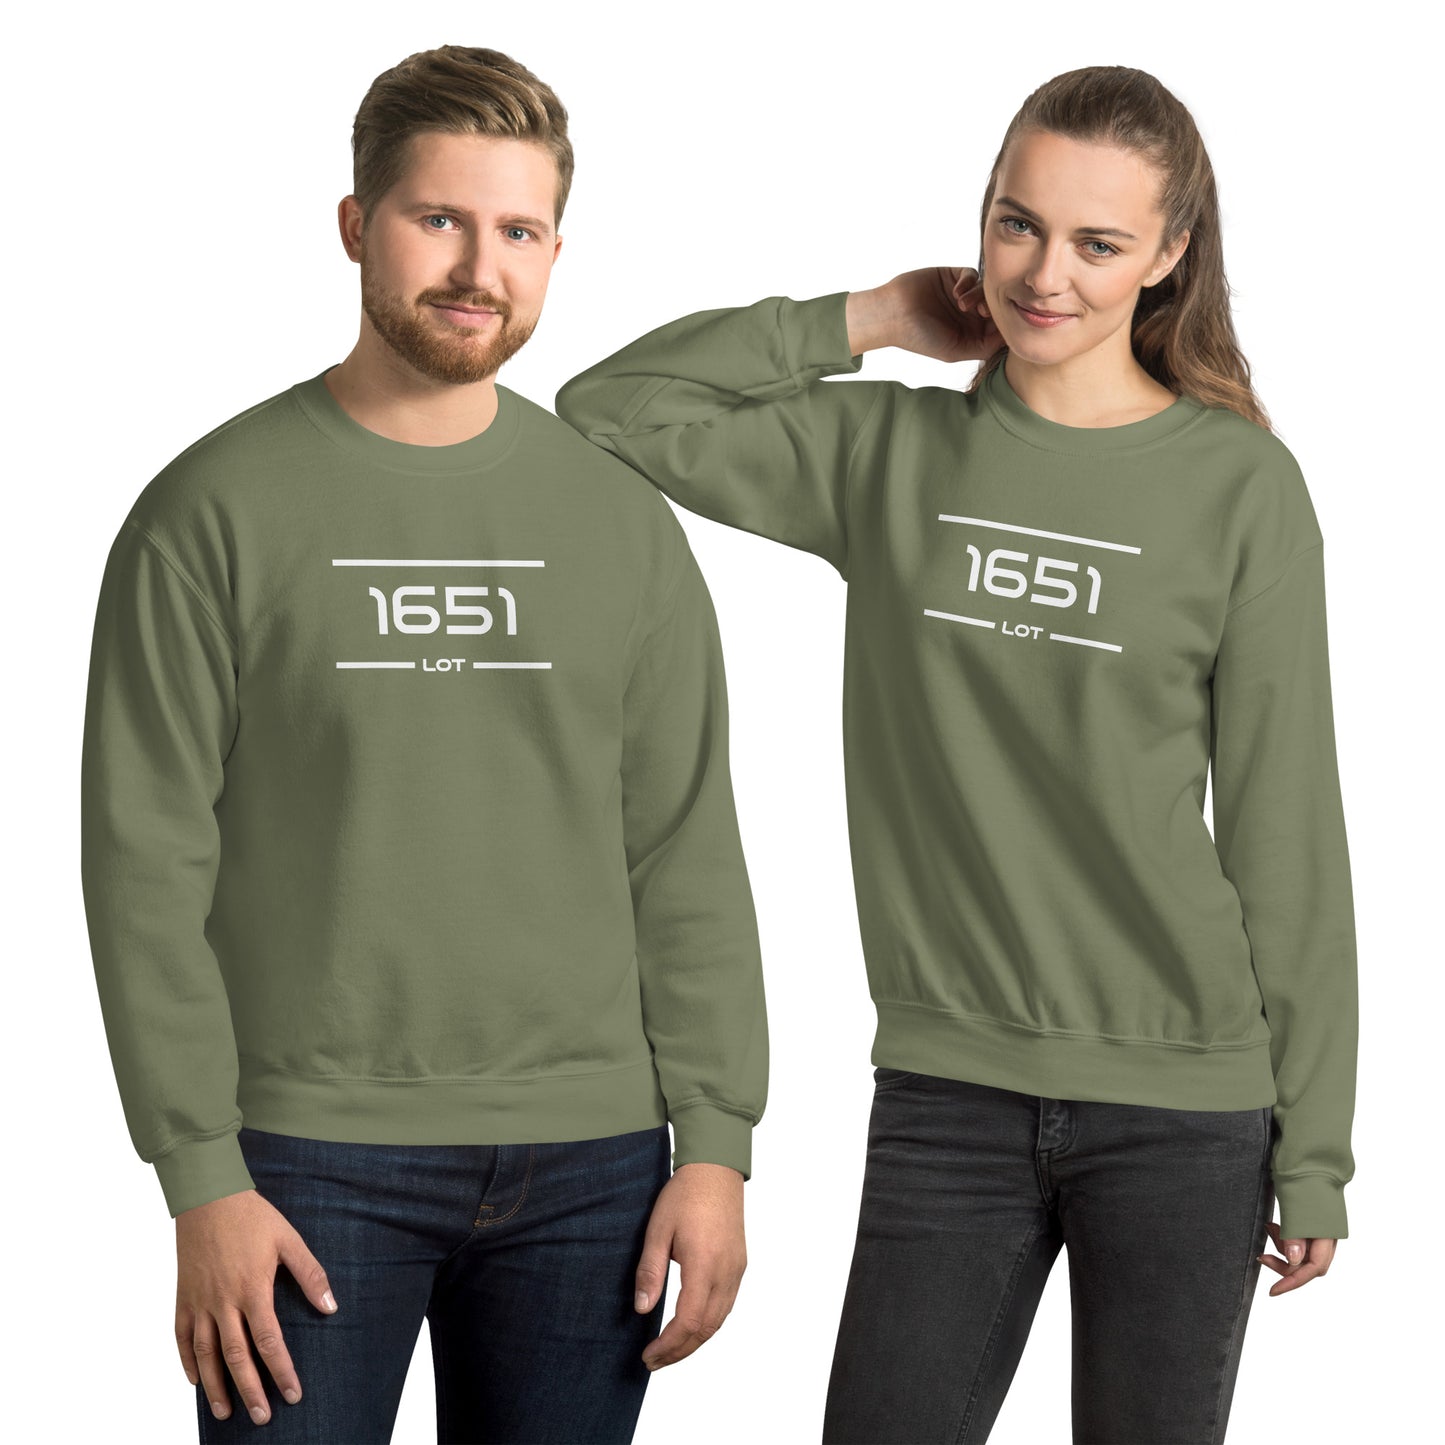 Sweater - 1651 - Lot (M/V)